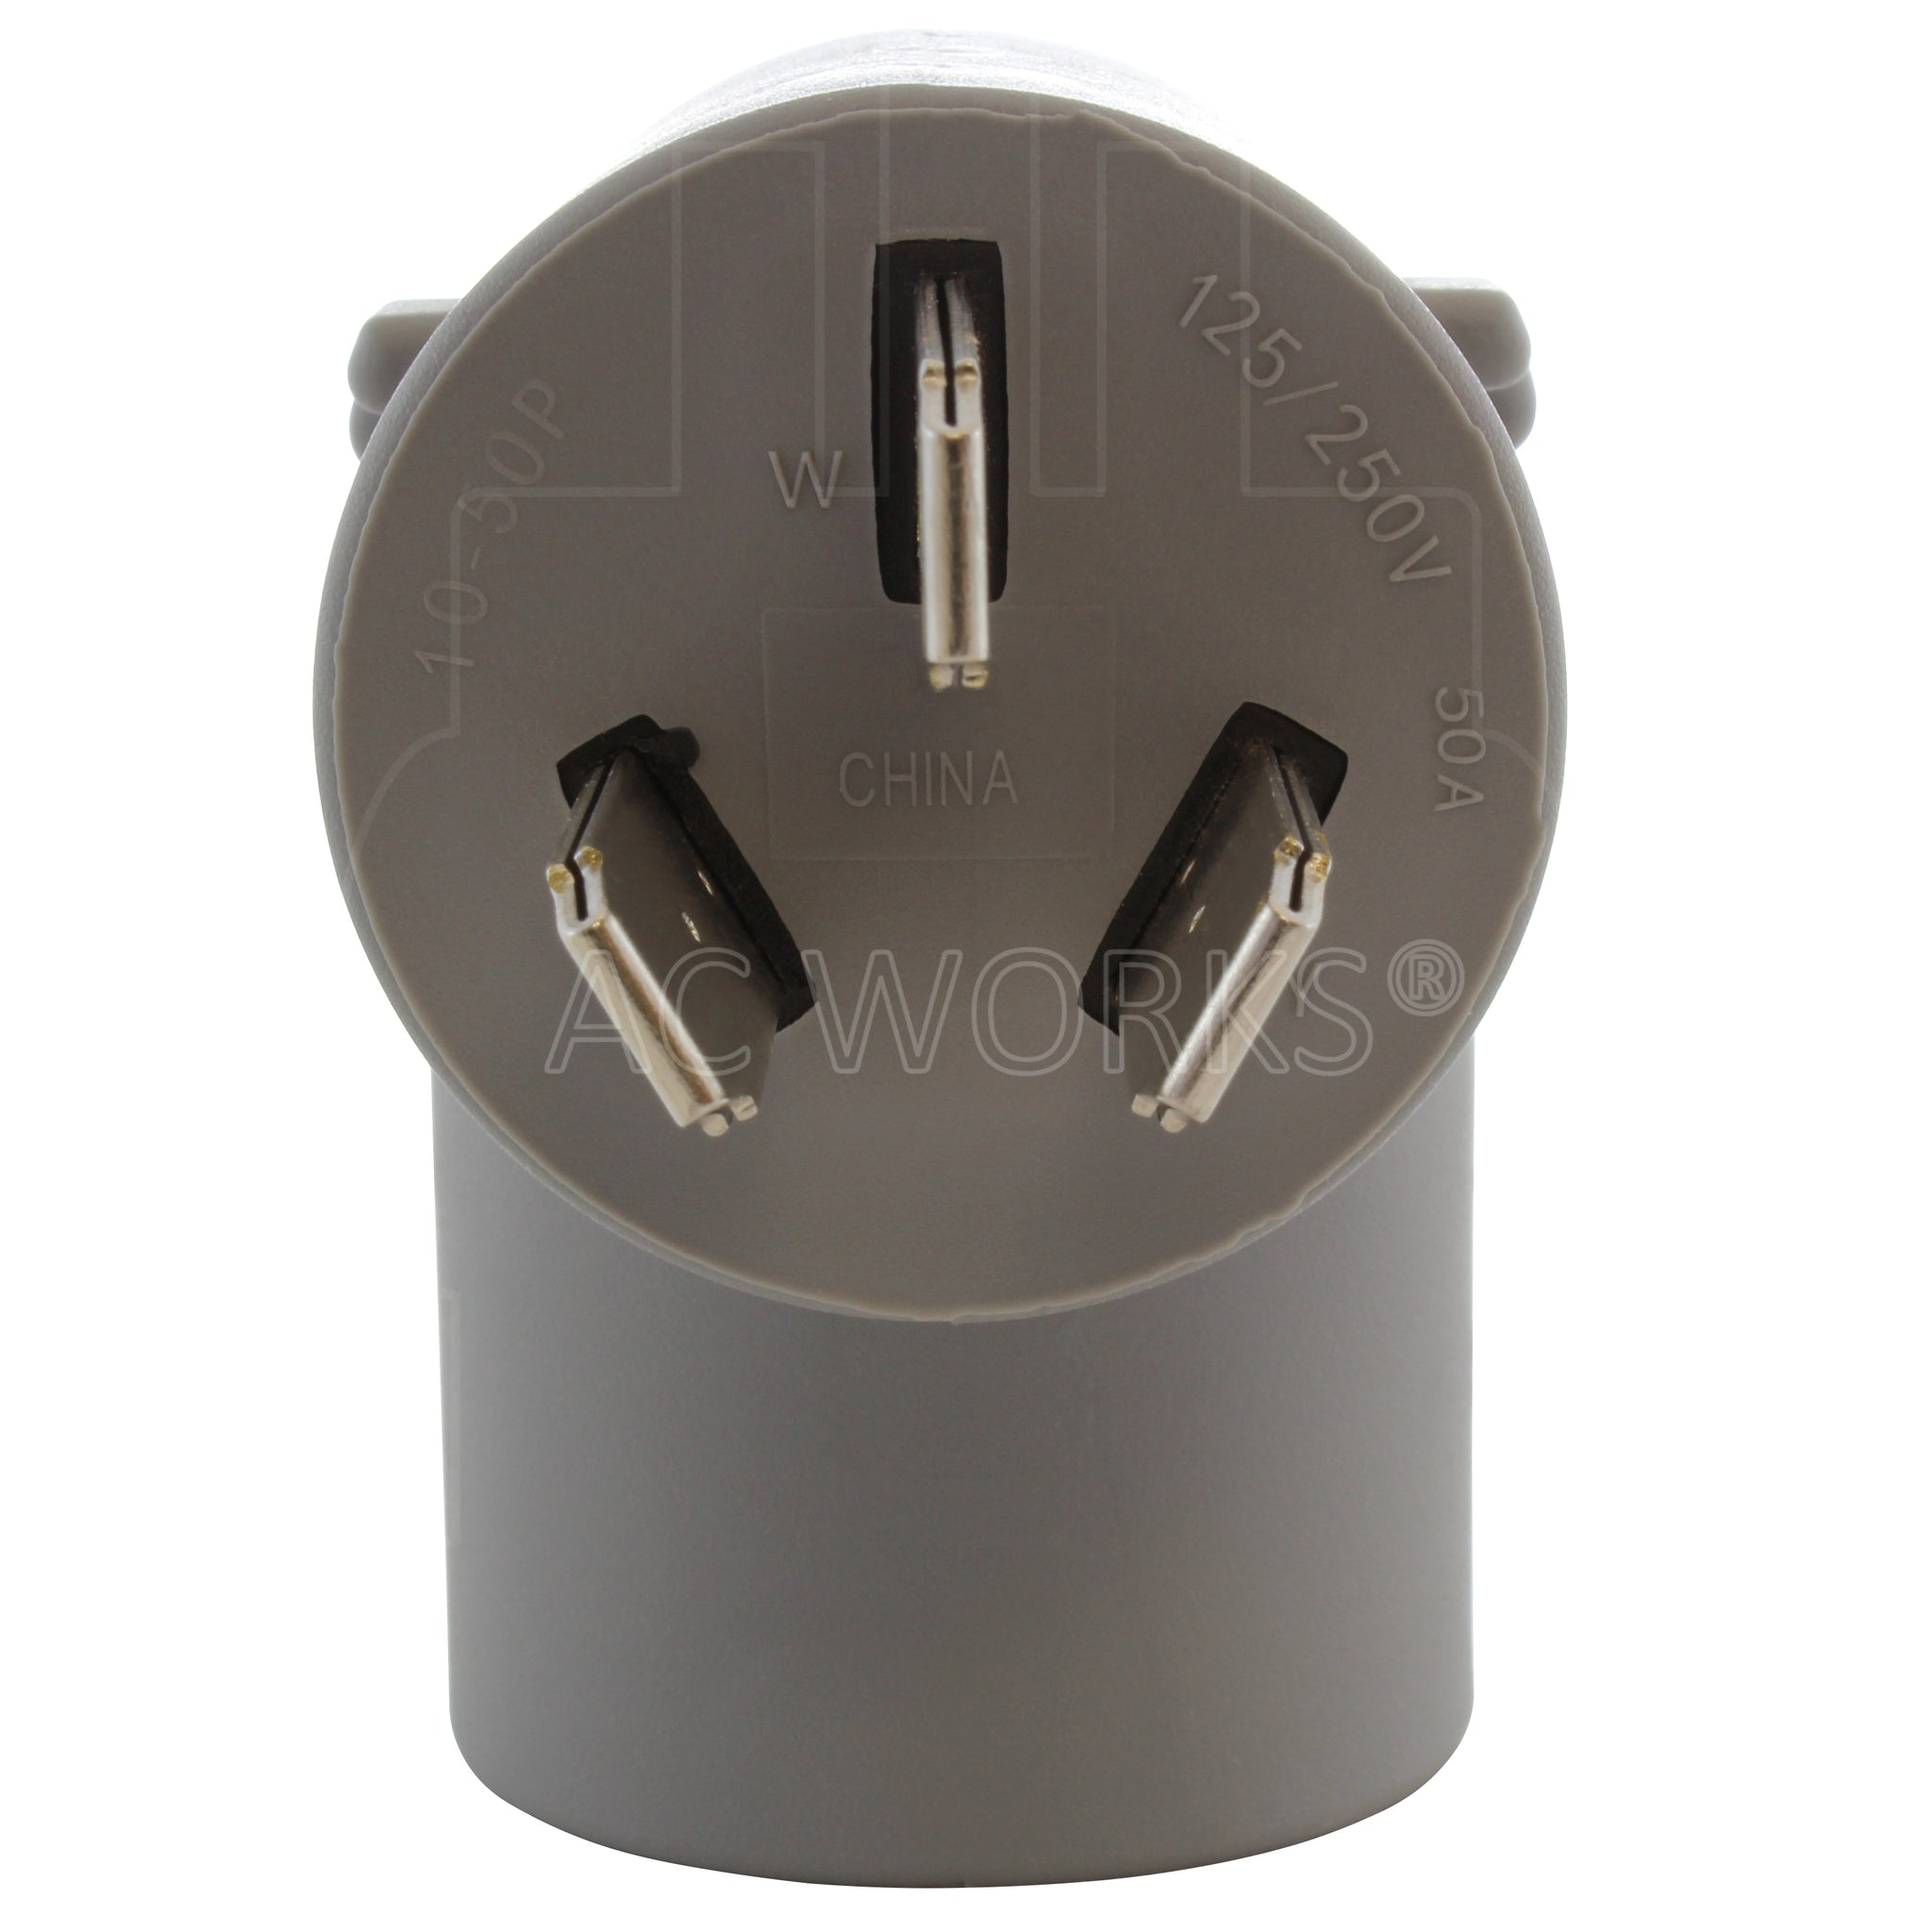 AC WORKS® Brand EV Charging Adapter NEMA 10-50 to Tesla Adapter